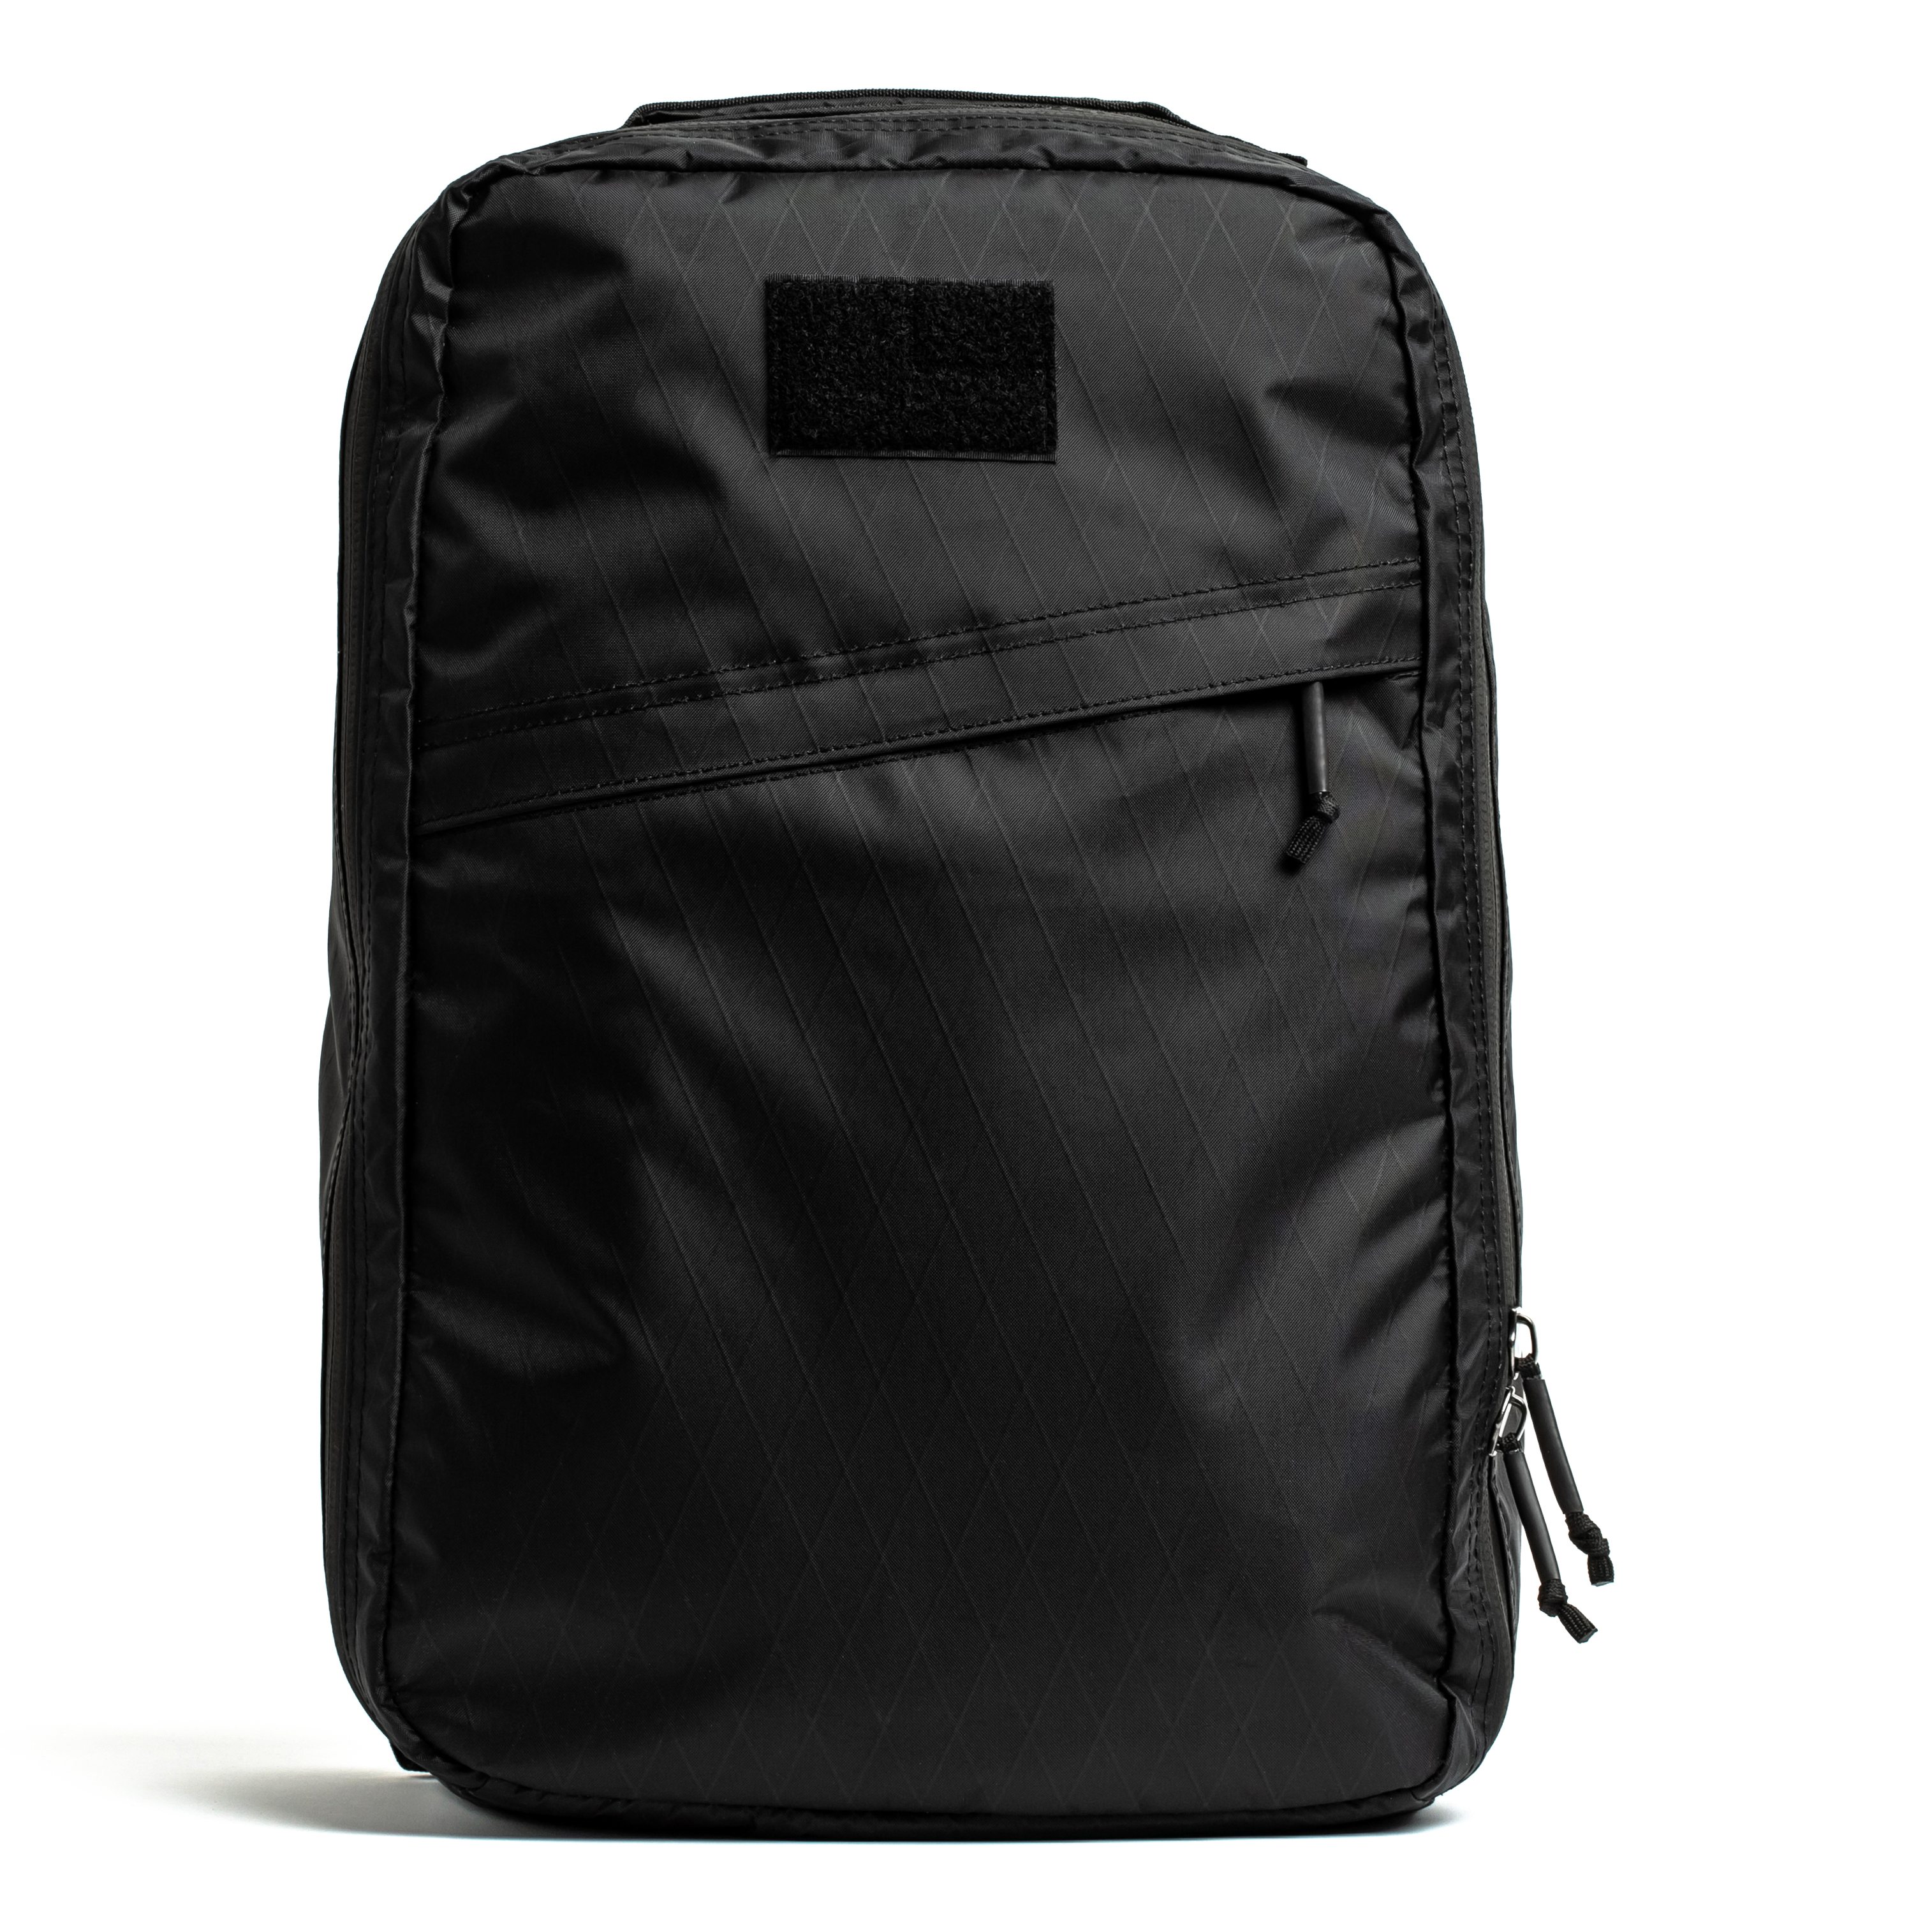 GR1 XPAC Backpack - 21L